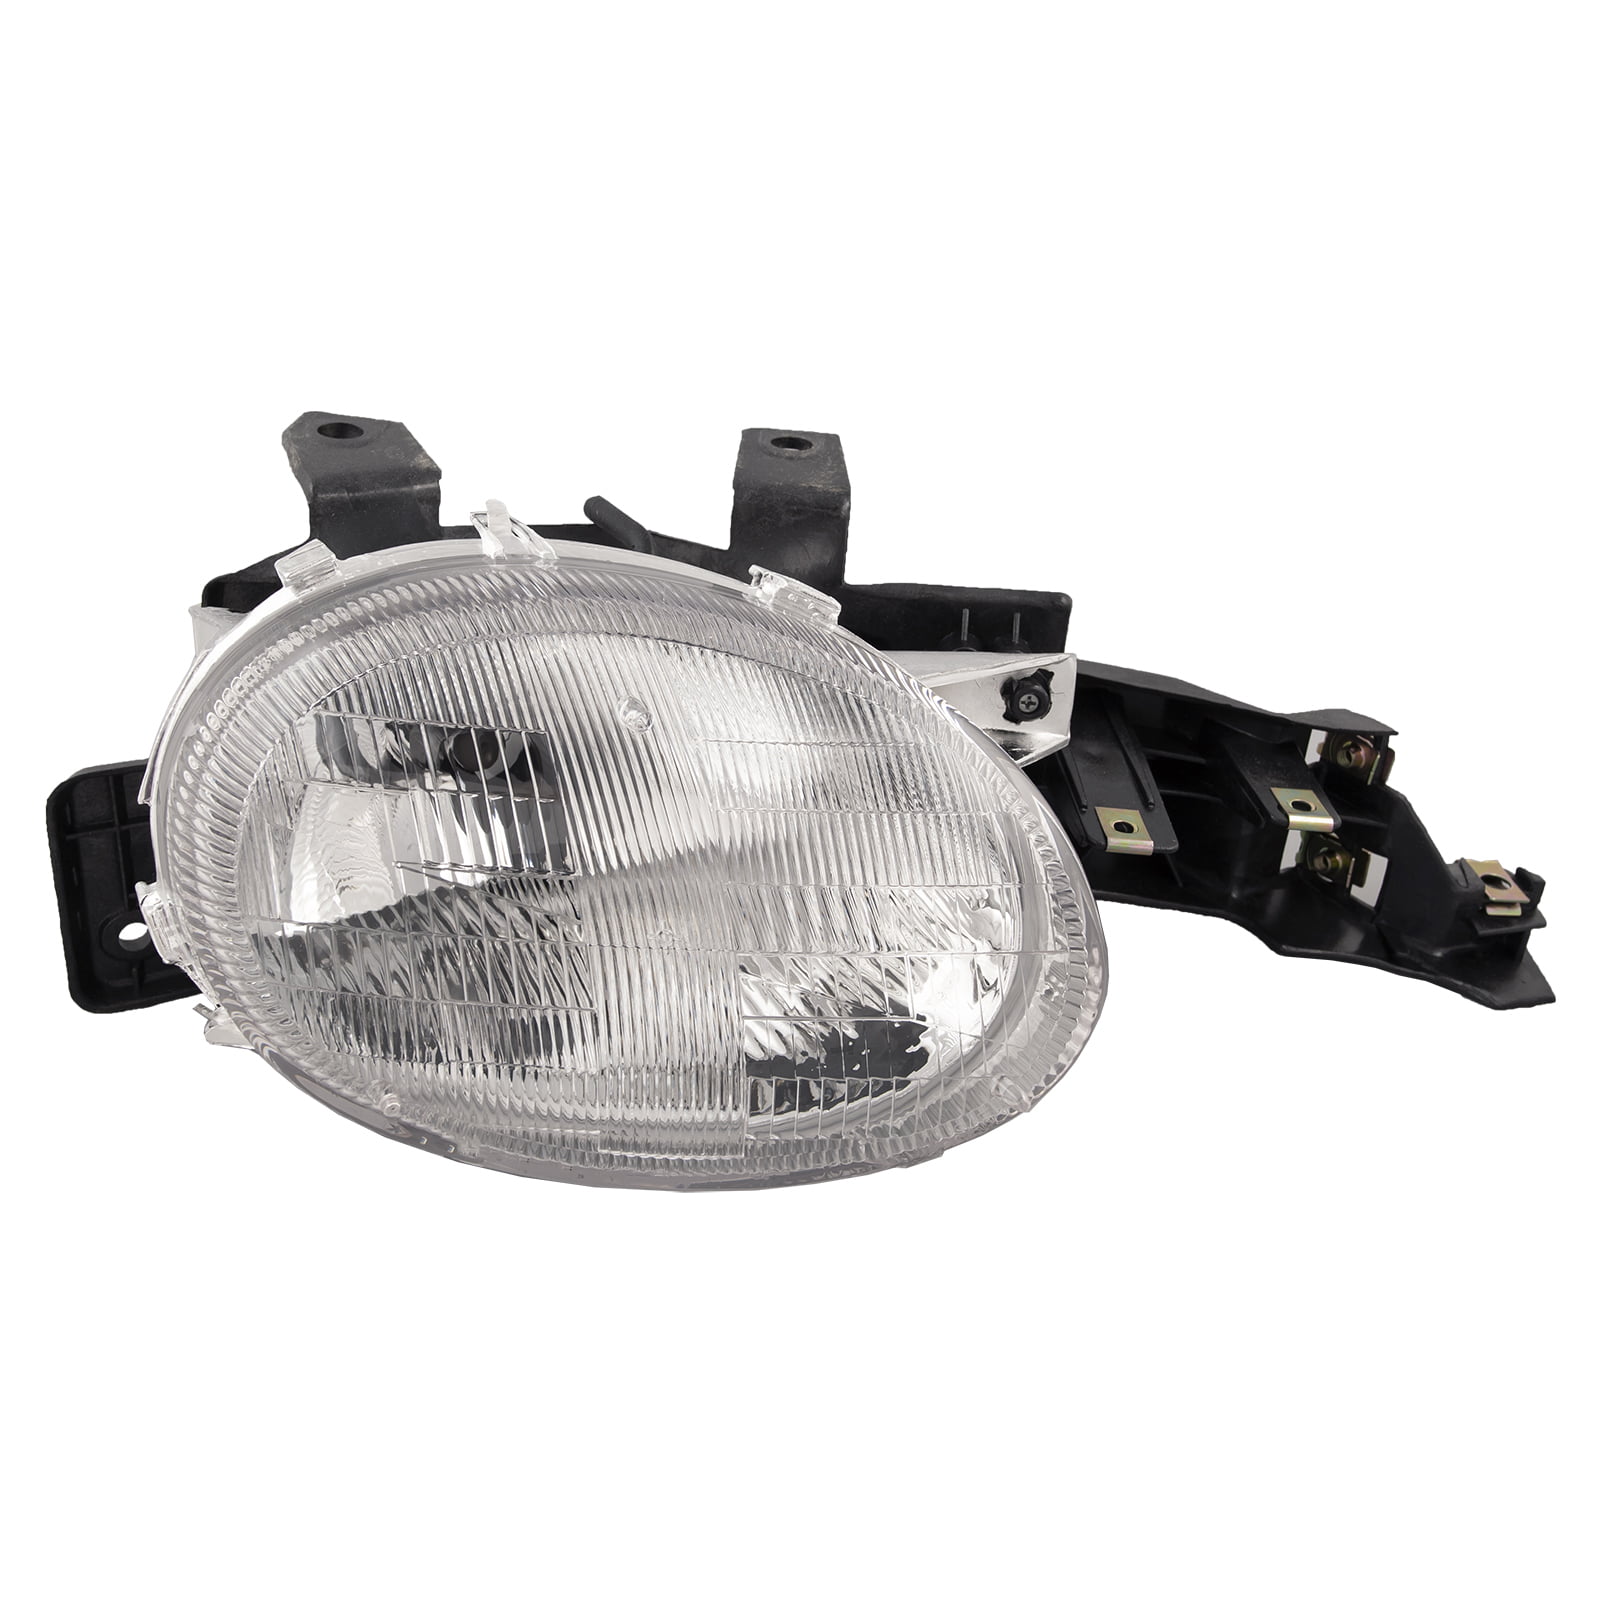 HEADLIGHTSDEPOT Headlight Compatible with Dodge Neon Headlight Front Left Driver & Right Passenger Side 